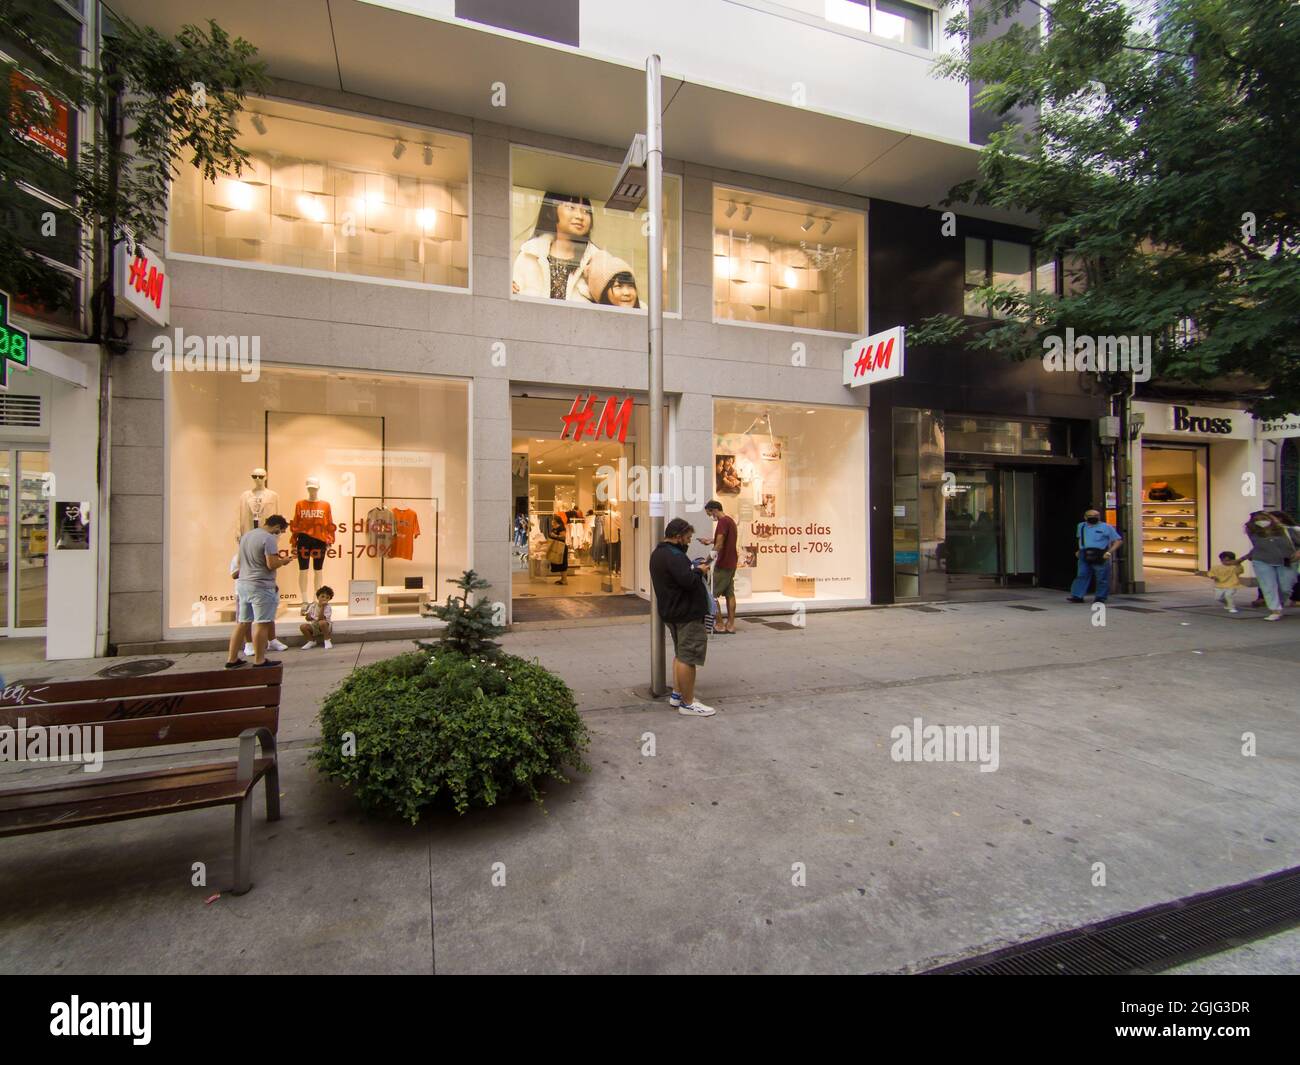 Shopping Vigo High Resolution Stock Photography and Images - Alamy